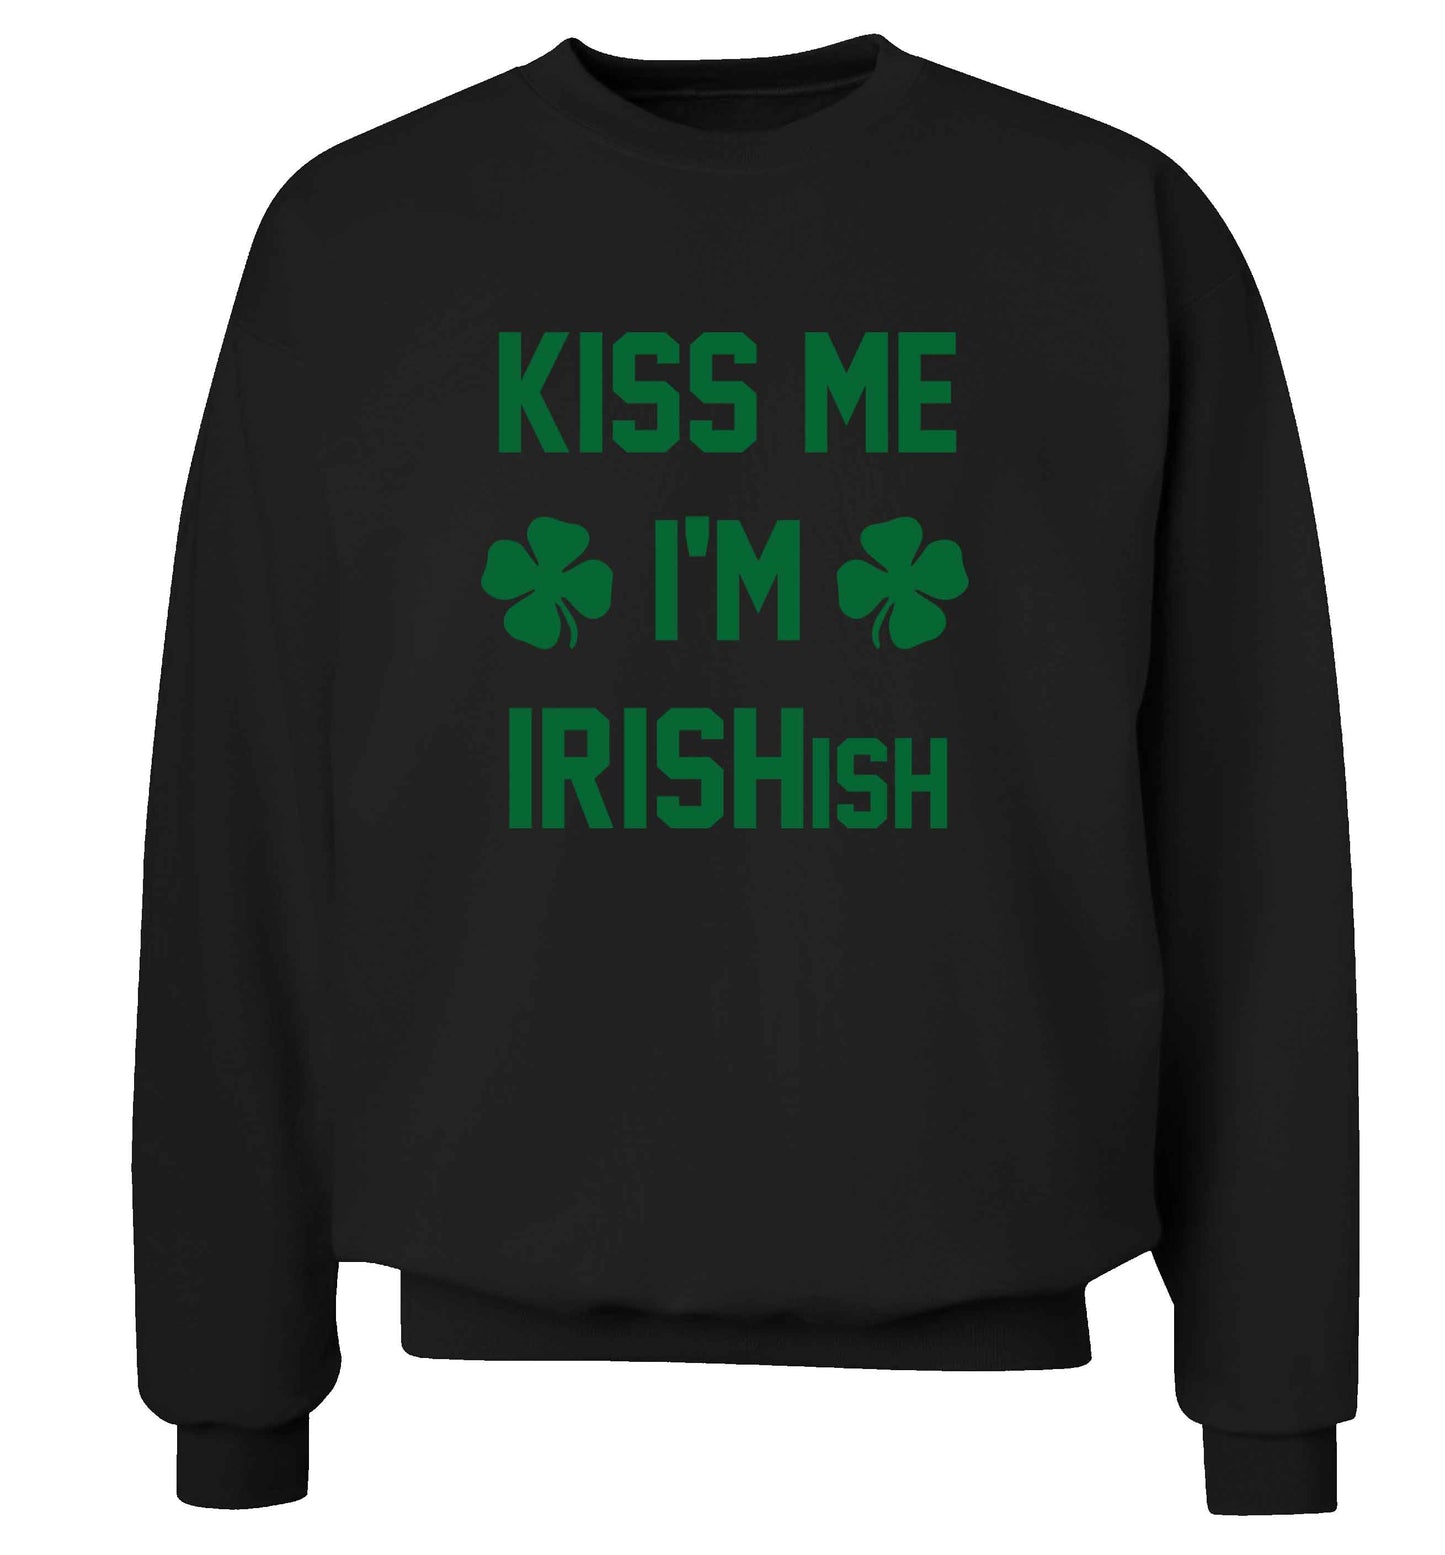 Kiss me I'm Irishish adult's unisex black sweater 2XL